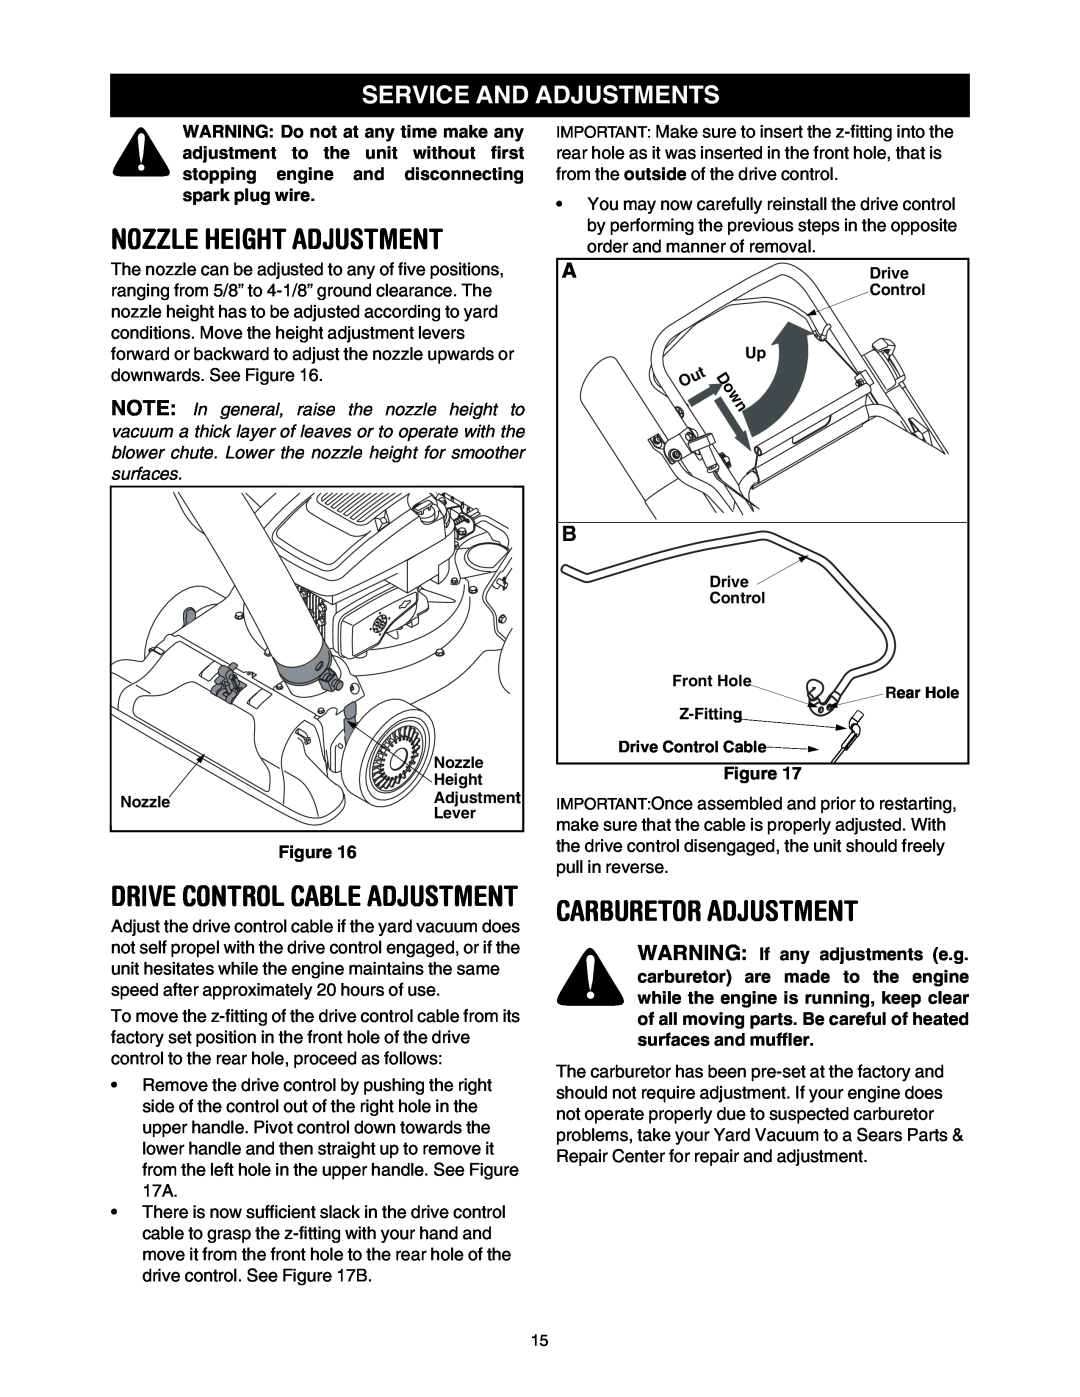 Craftsman 247.77099 operating instructions Carburetor Adjustment, Service And Adjustments, Nozzle Height Adjustment, Figure 